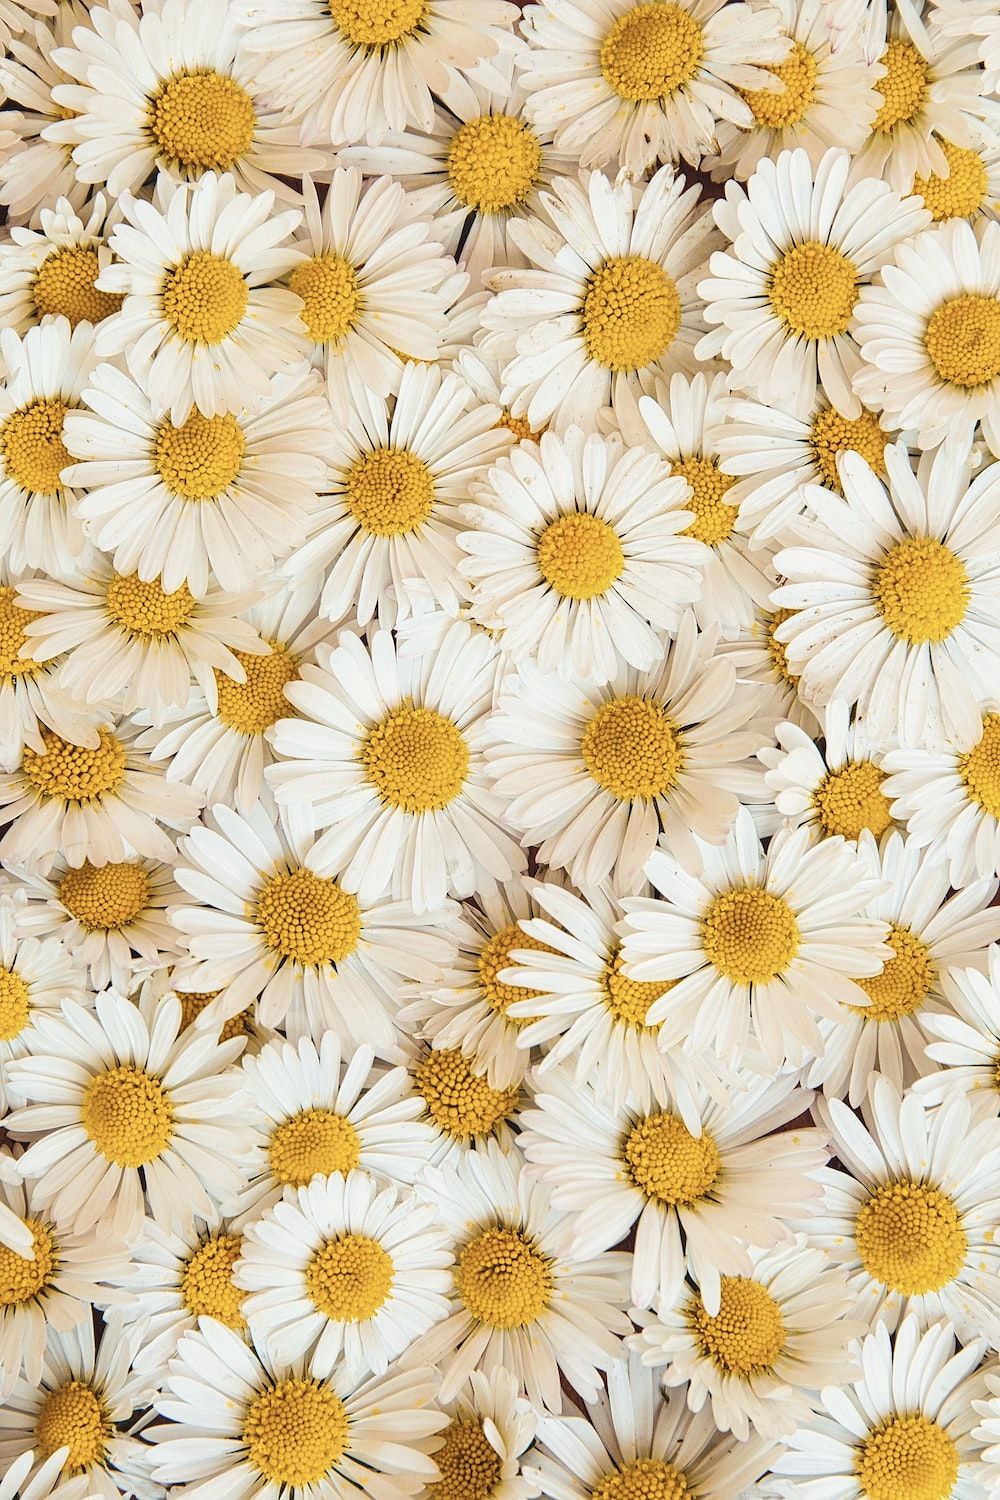 A close up of many white daisies - Daisy